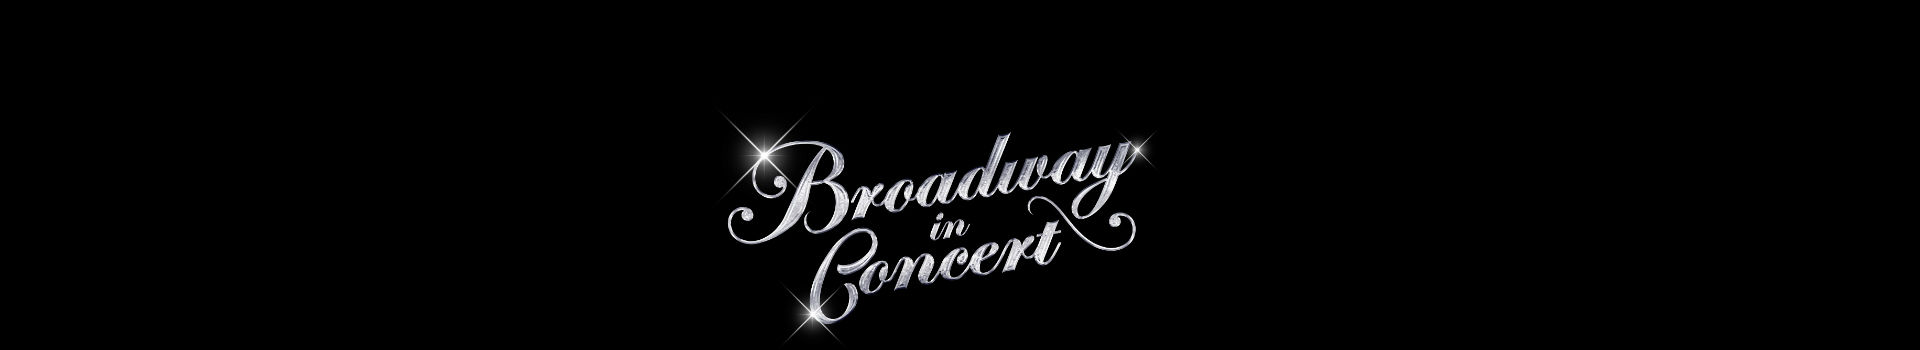 Broadway in Concert banner image